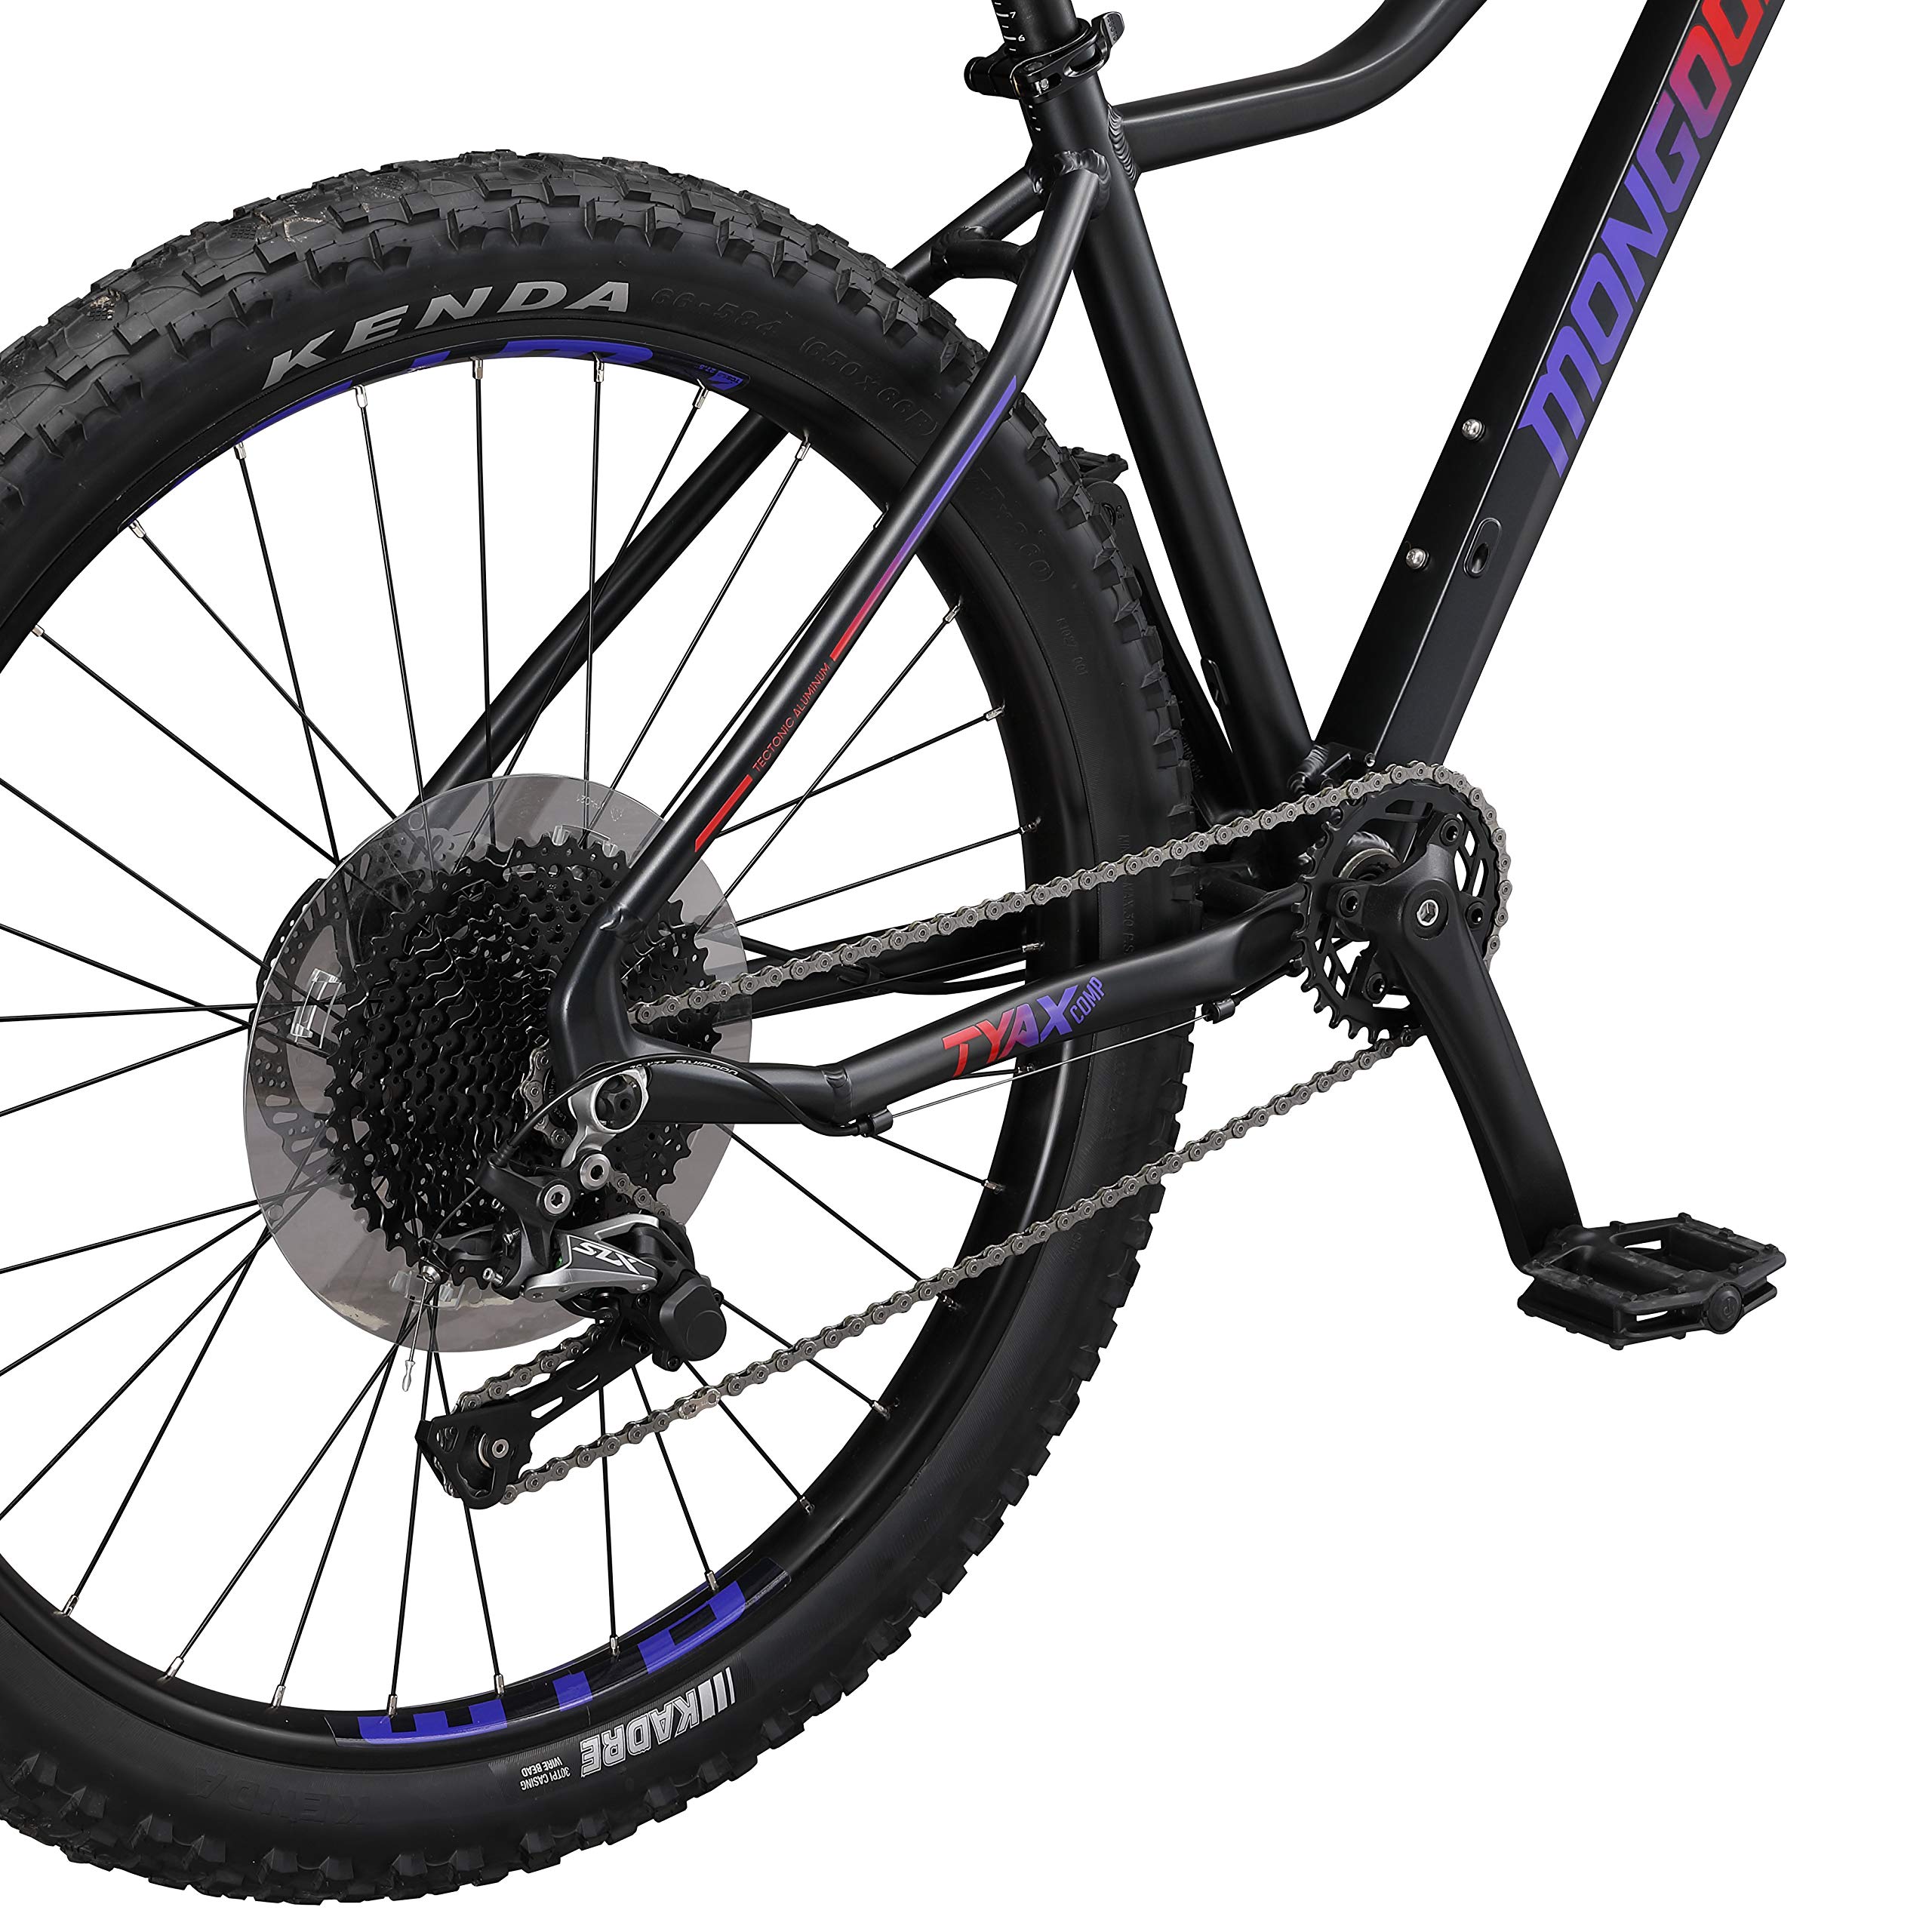 Mongoose Tyax Comp Adult Mountain Bike, 27.5-Inch Wheels, Tectonic T2 Aluminum Frame, Rigid Hardtail, Hydraulic Disc Brakes, Womens Medium Frame, Black